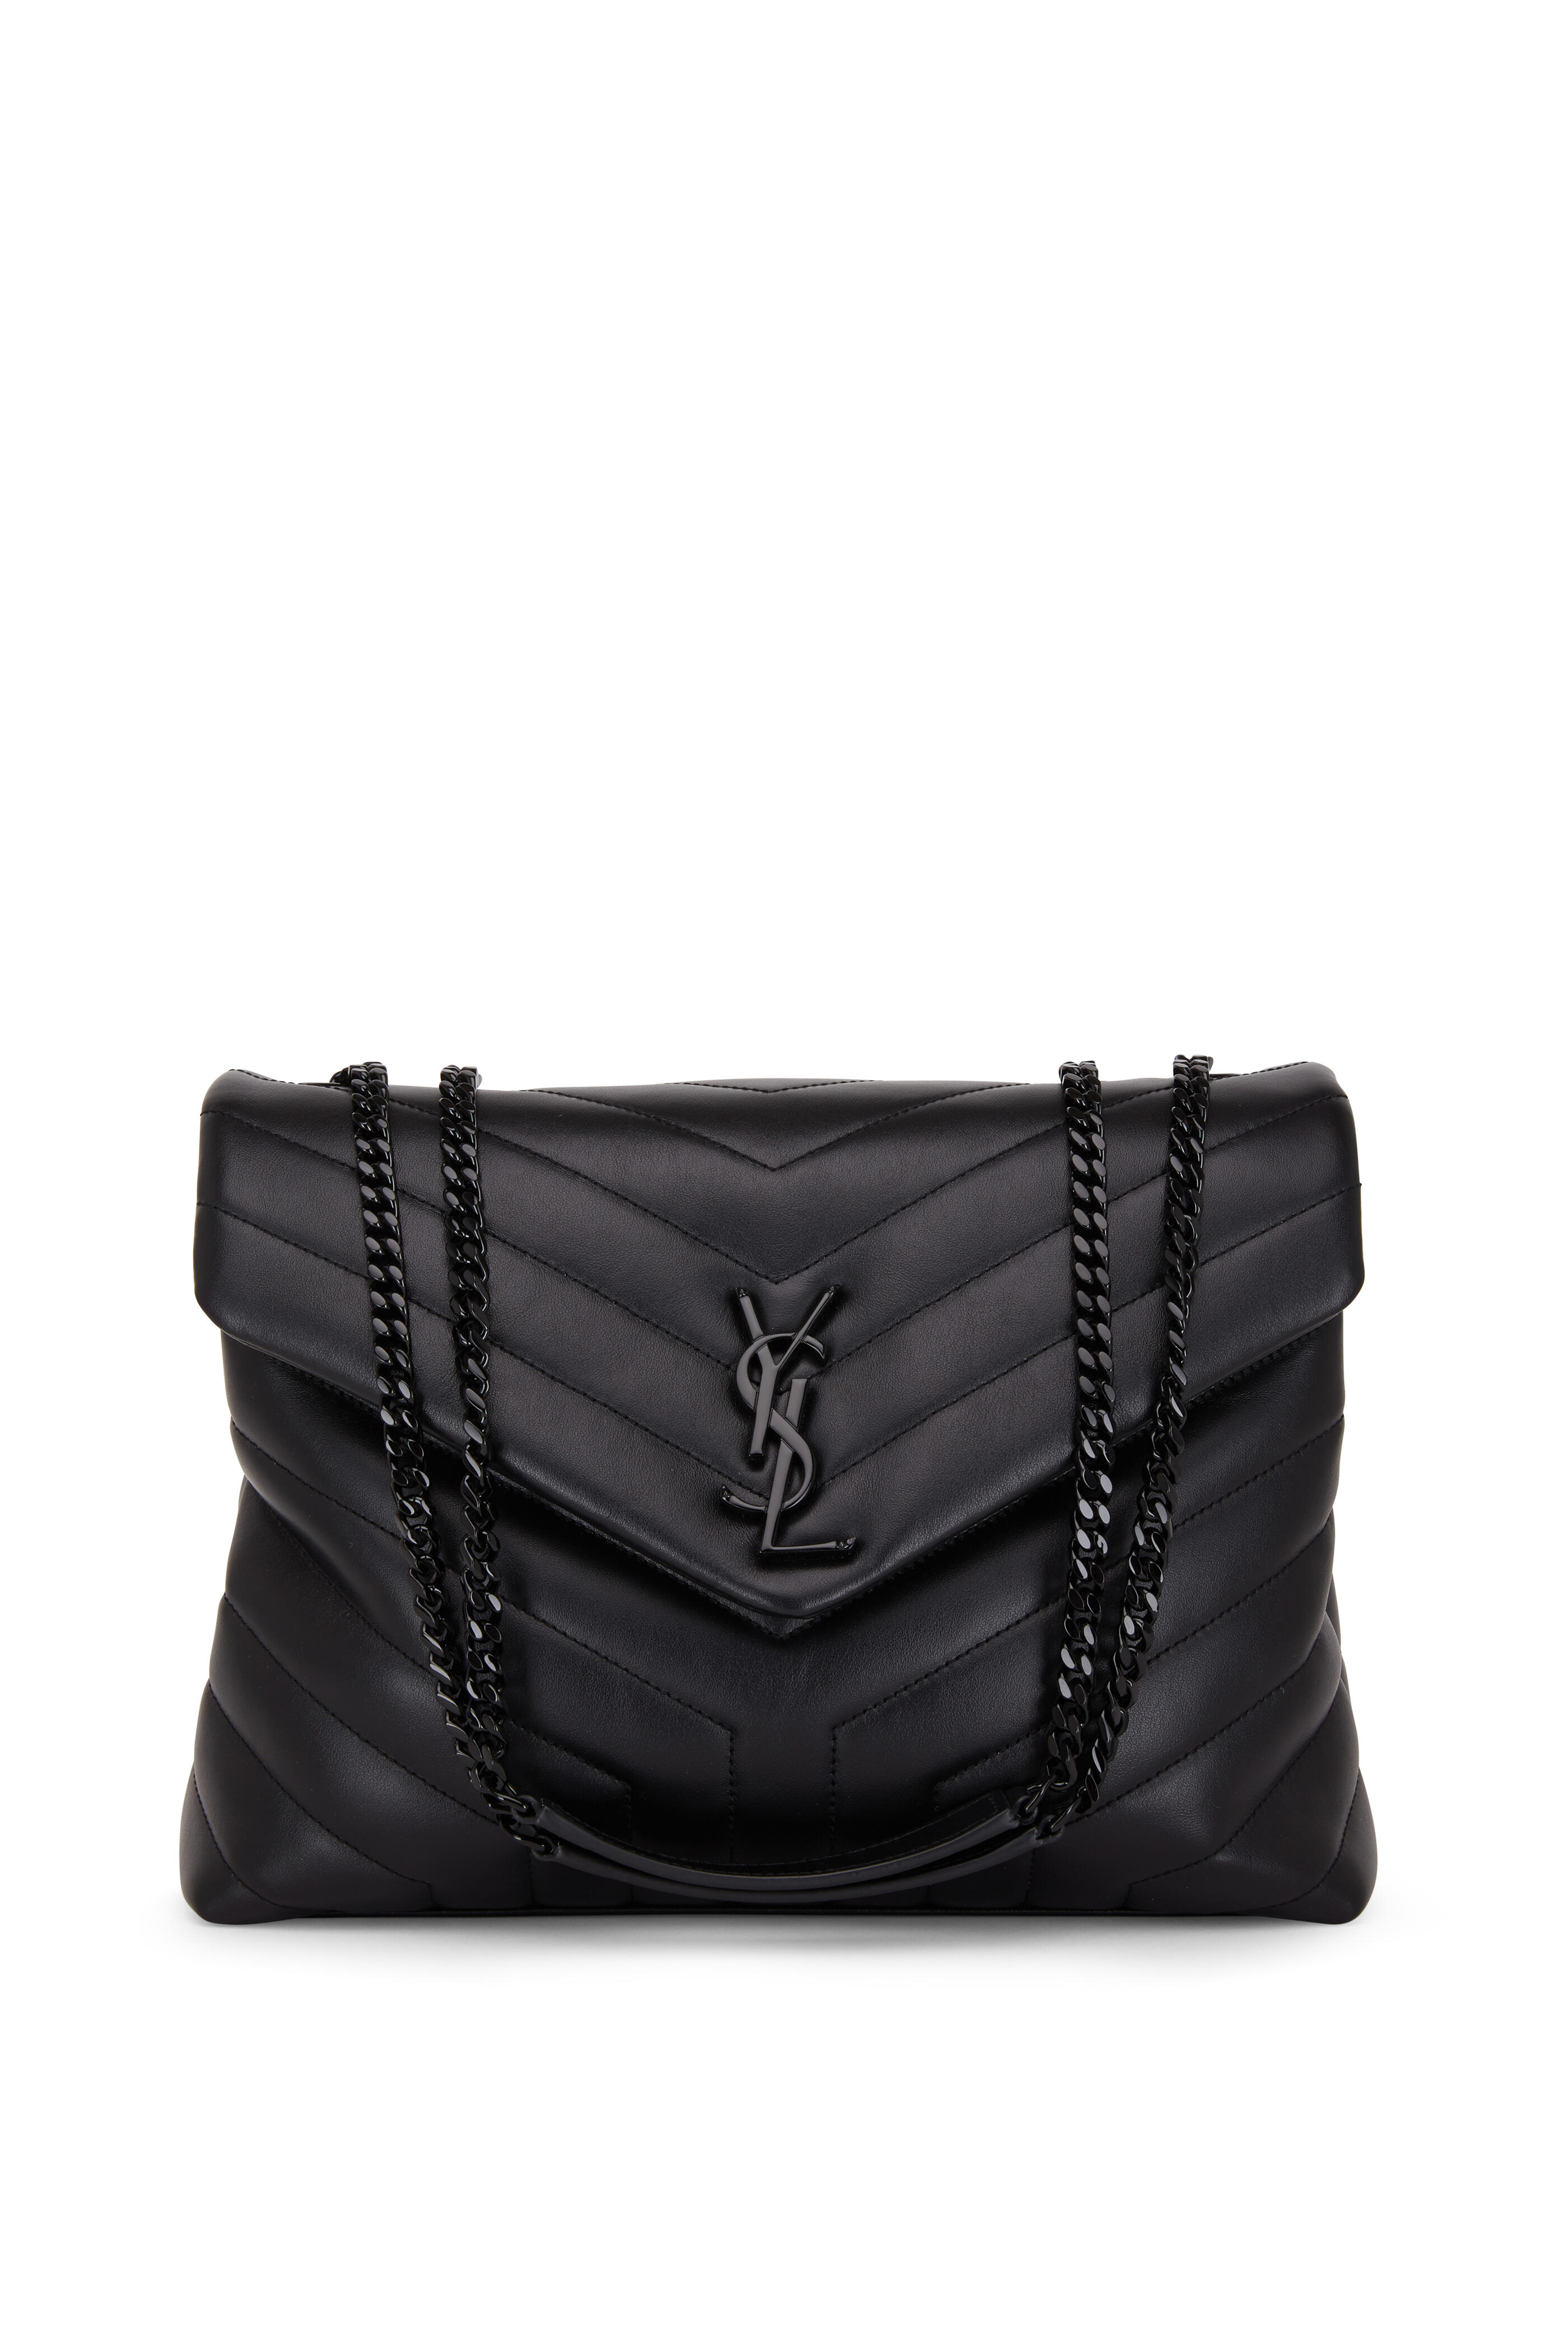 Saint Laurent - Loulou Black Quilted Leather Chain Medium Bag